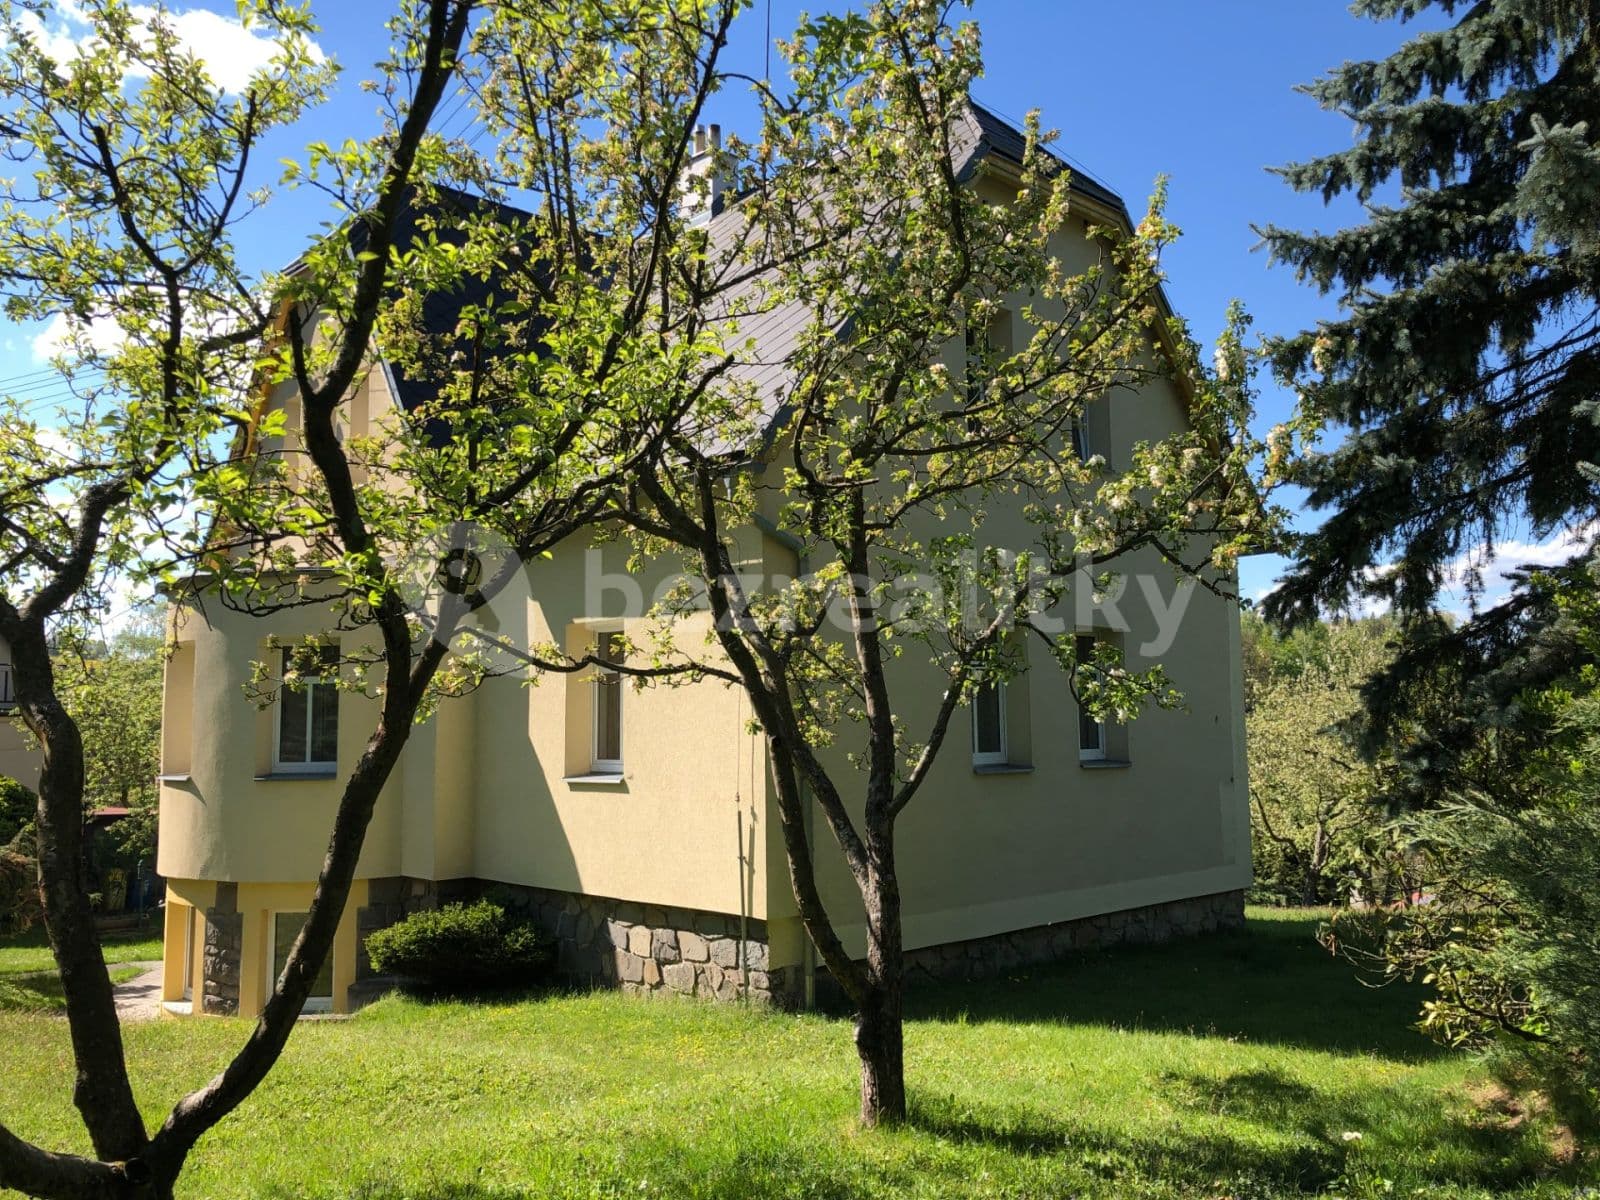 Predaj domu 120 m², pozemek 1.600 m², Sokolská, Senohraby, Středočeský kraj